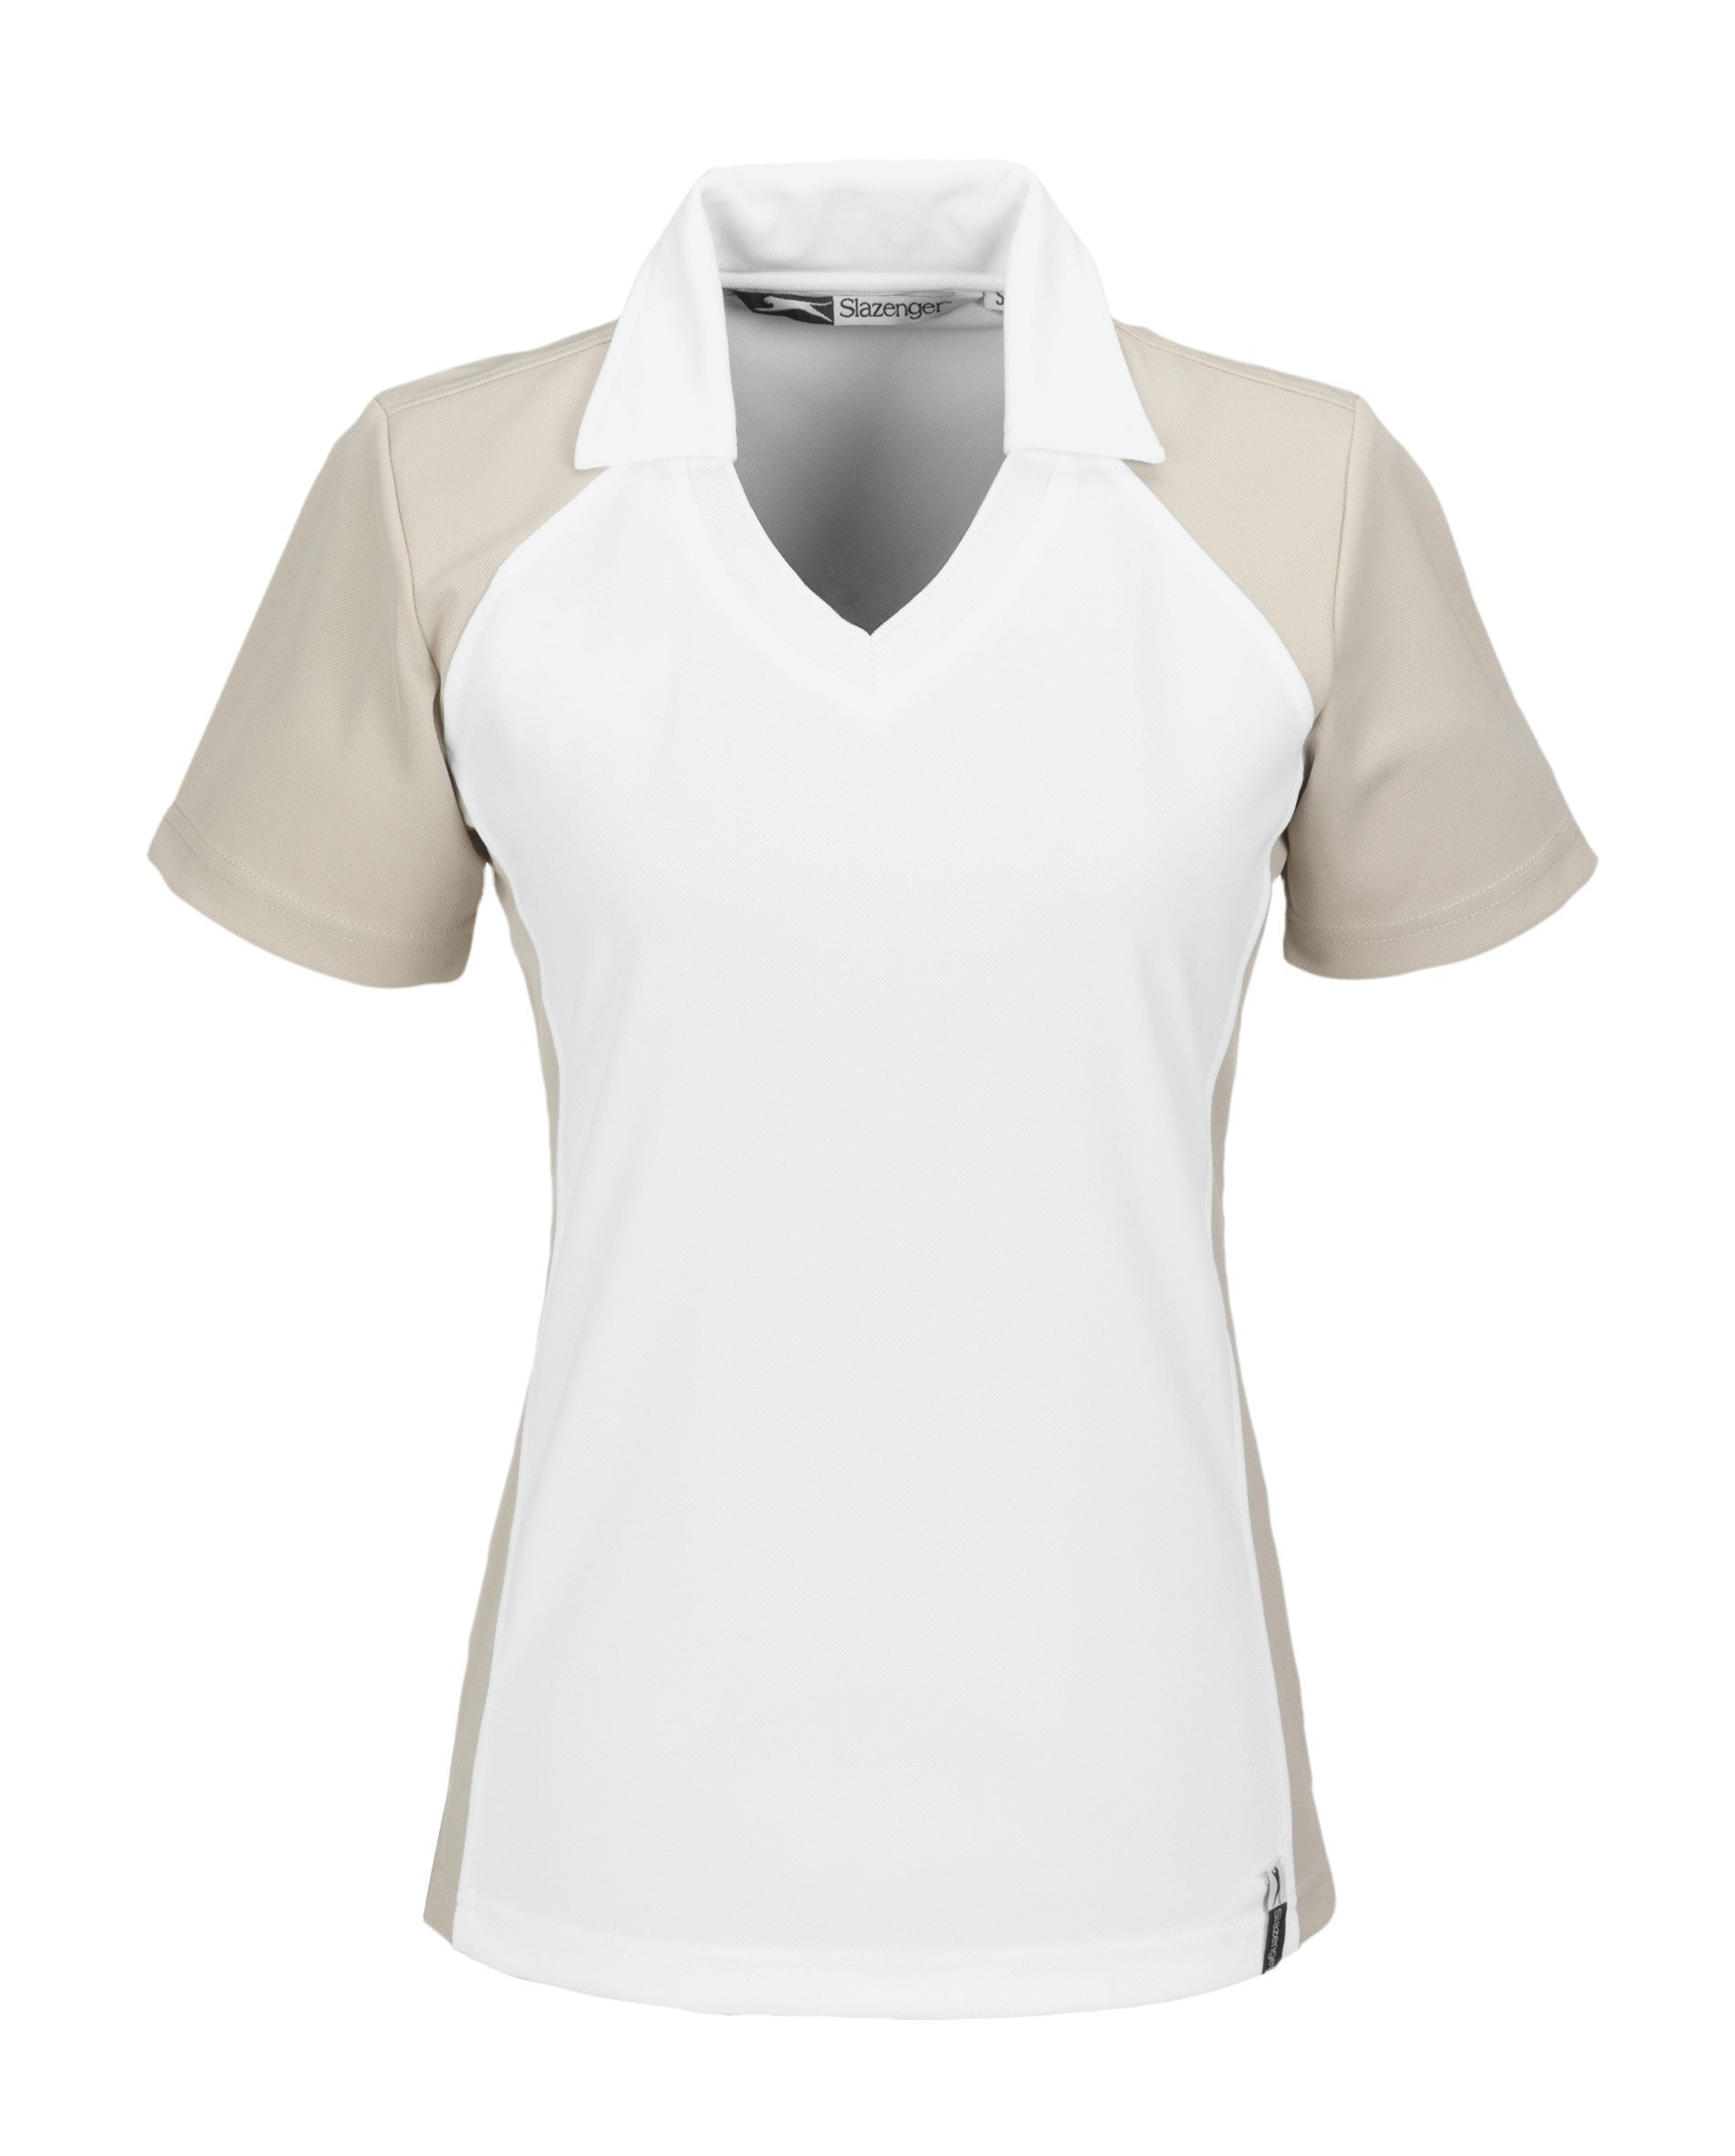 Ladies Grandslam Golf Shirt - Navy Only-2XL-Khaki-KH